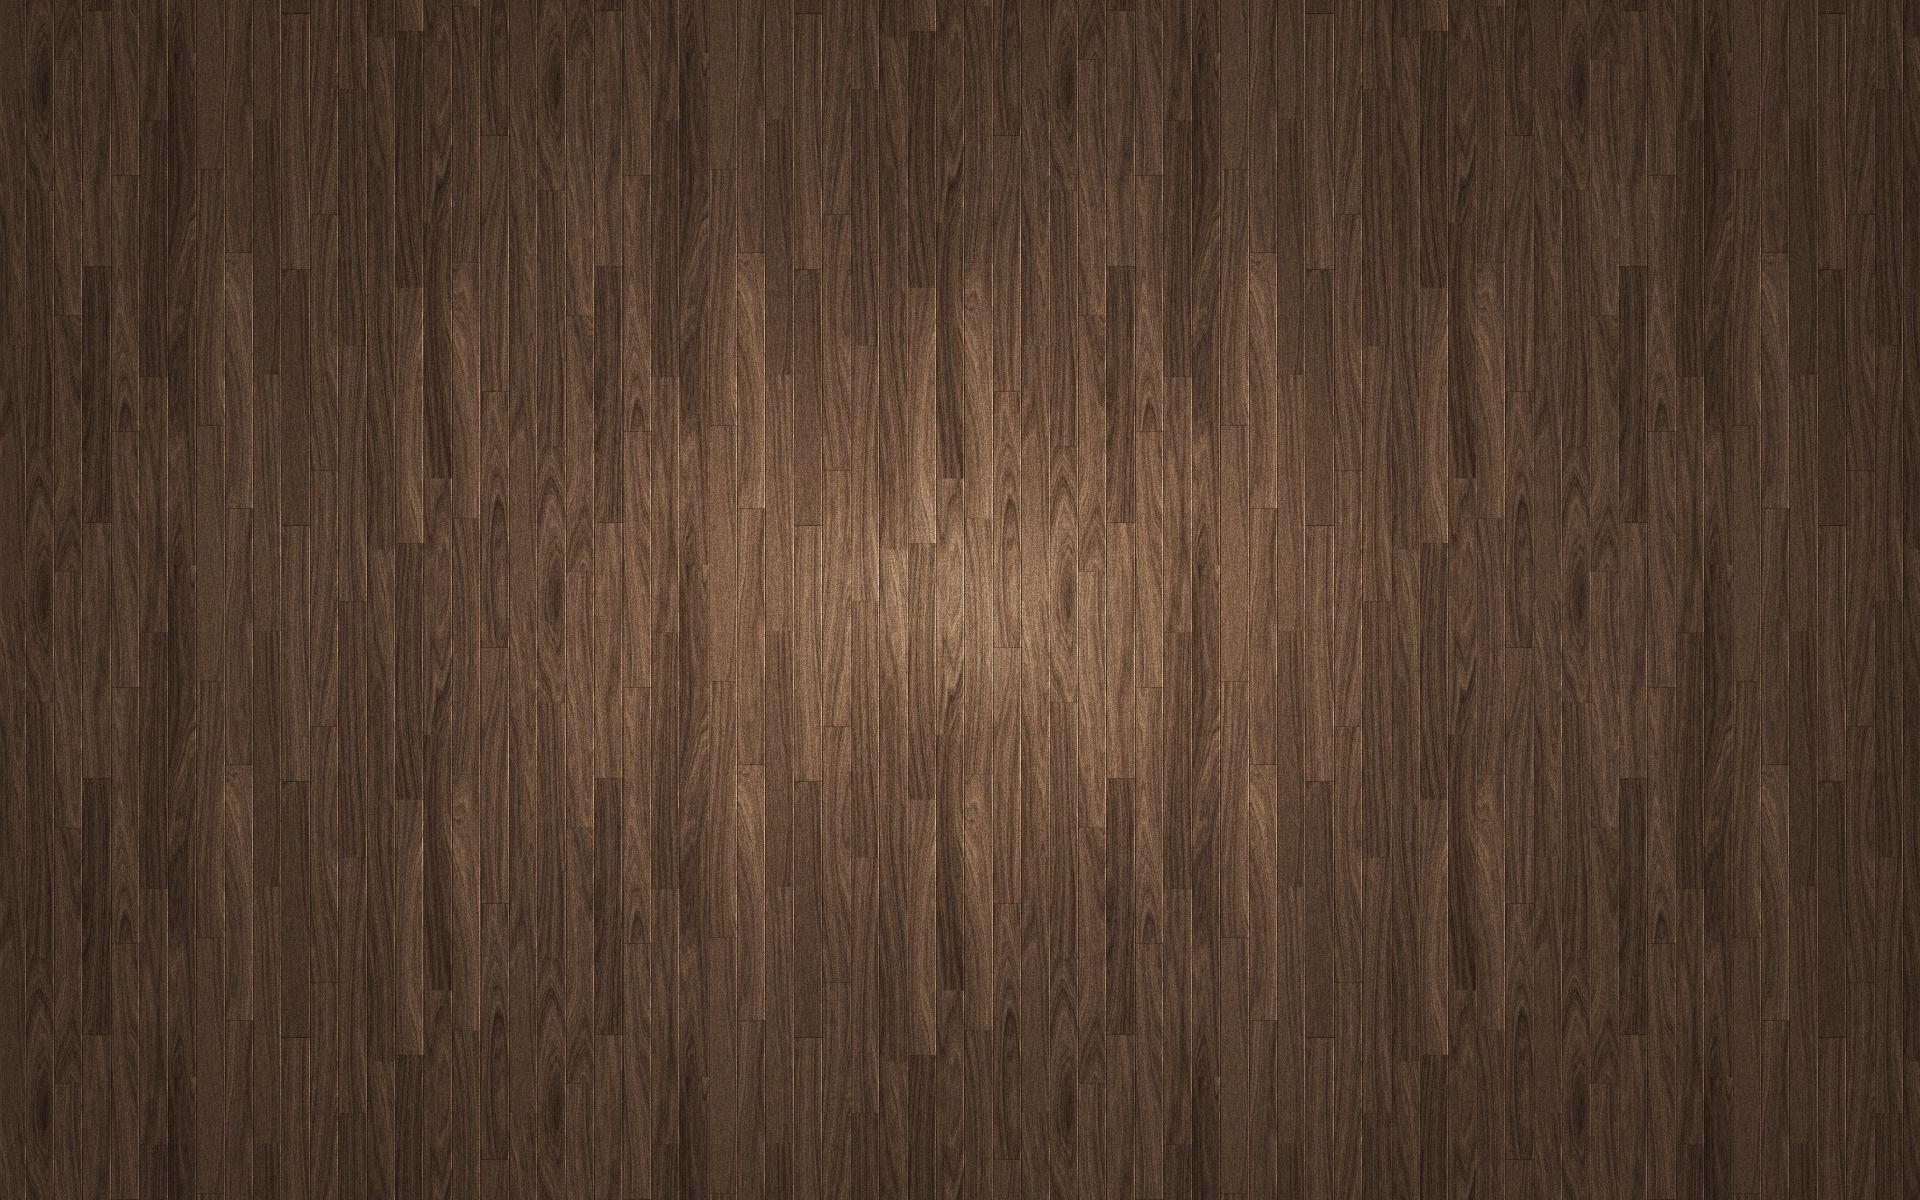 1920x1200 Wood background tumblr likewise art deco patterns vector on floor - Wood  Background Tumblr Likewise Art